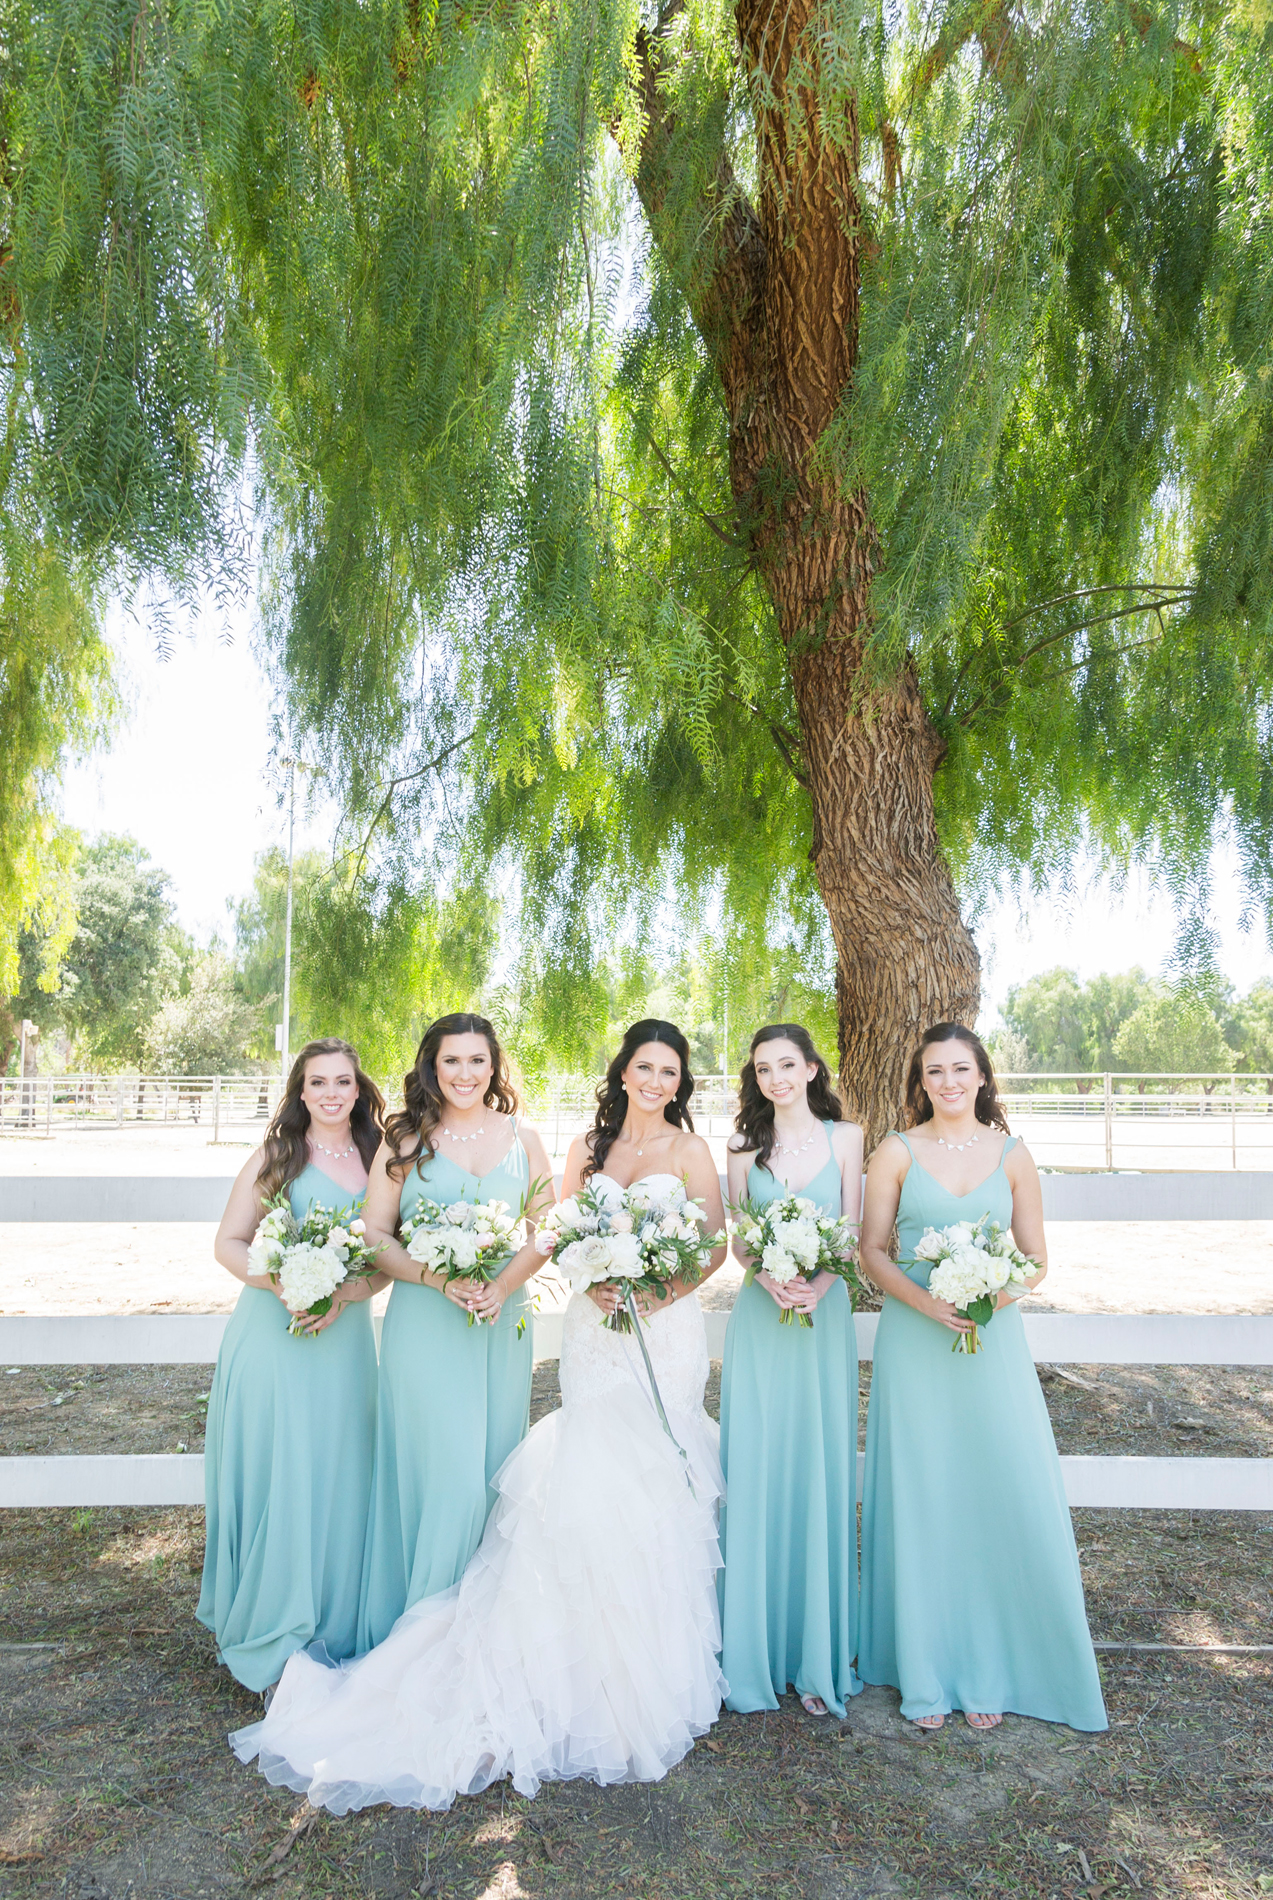 Mint Bridesmaid Dresses - A McCoy Equestrian Center Wedding - Peterson Design & Photography